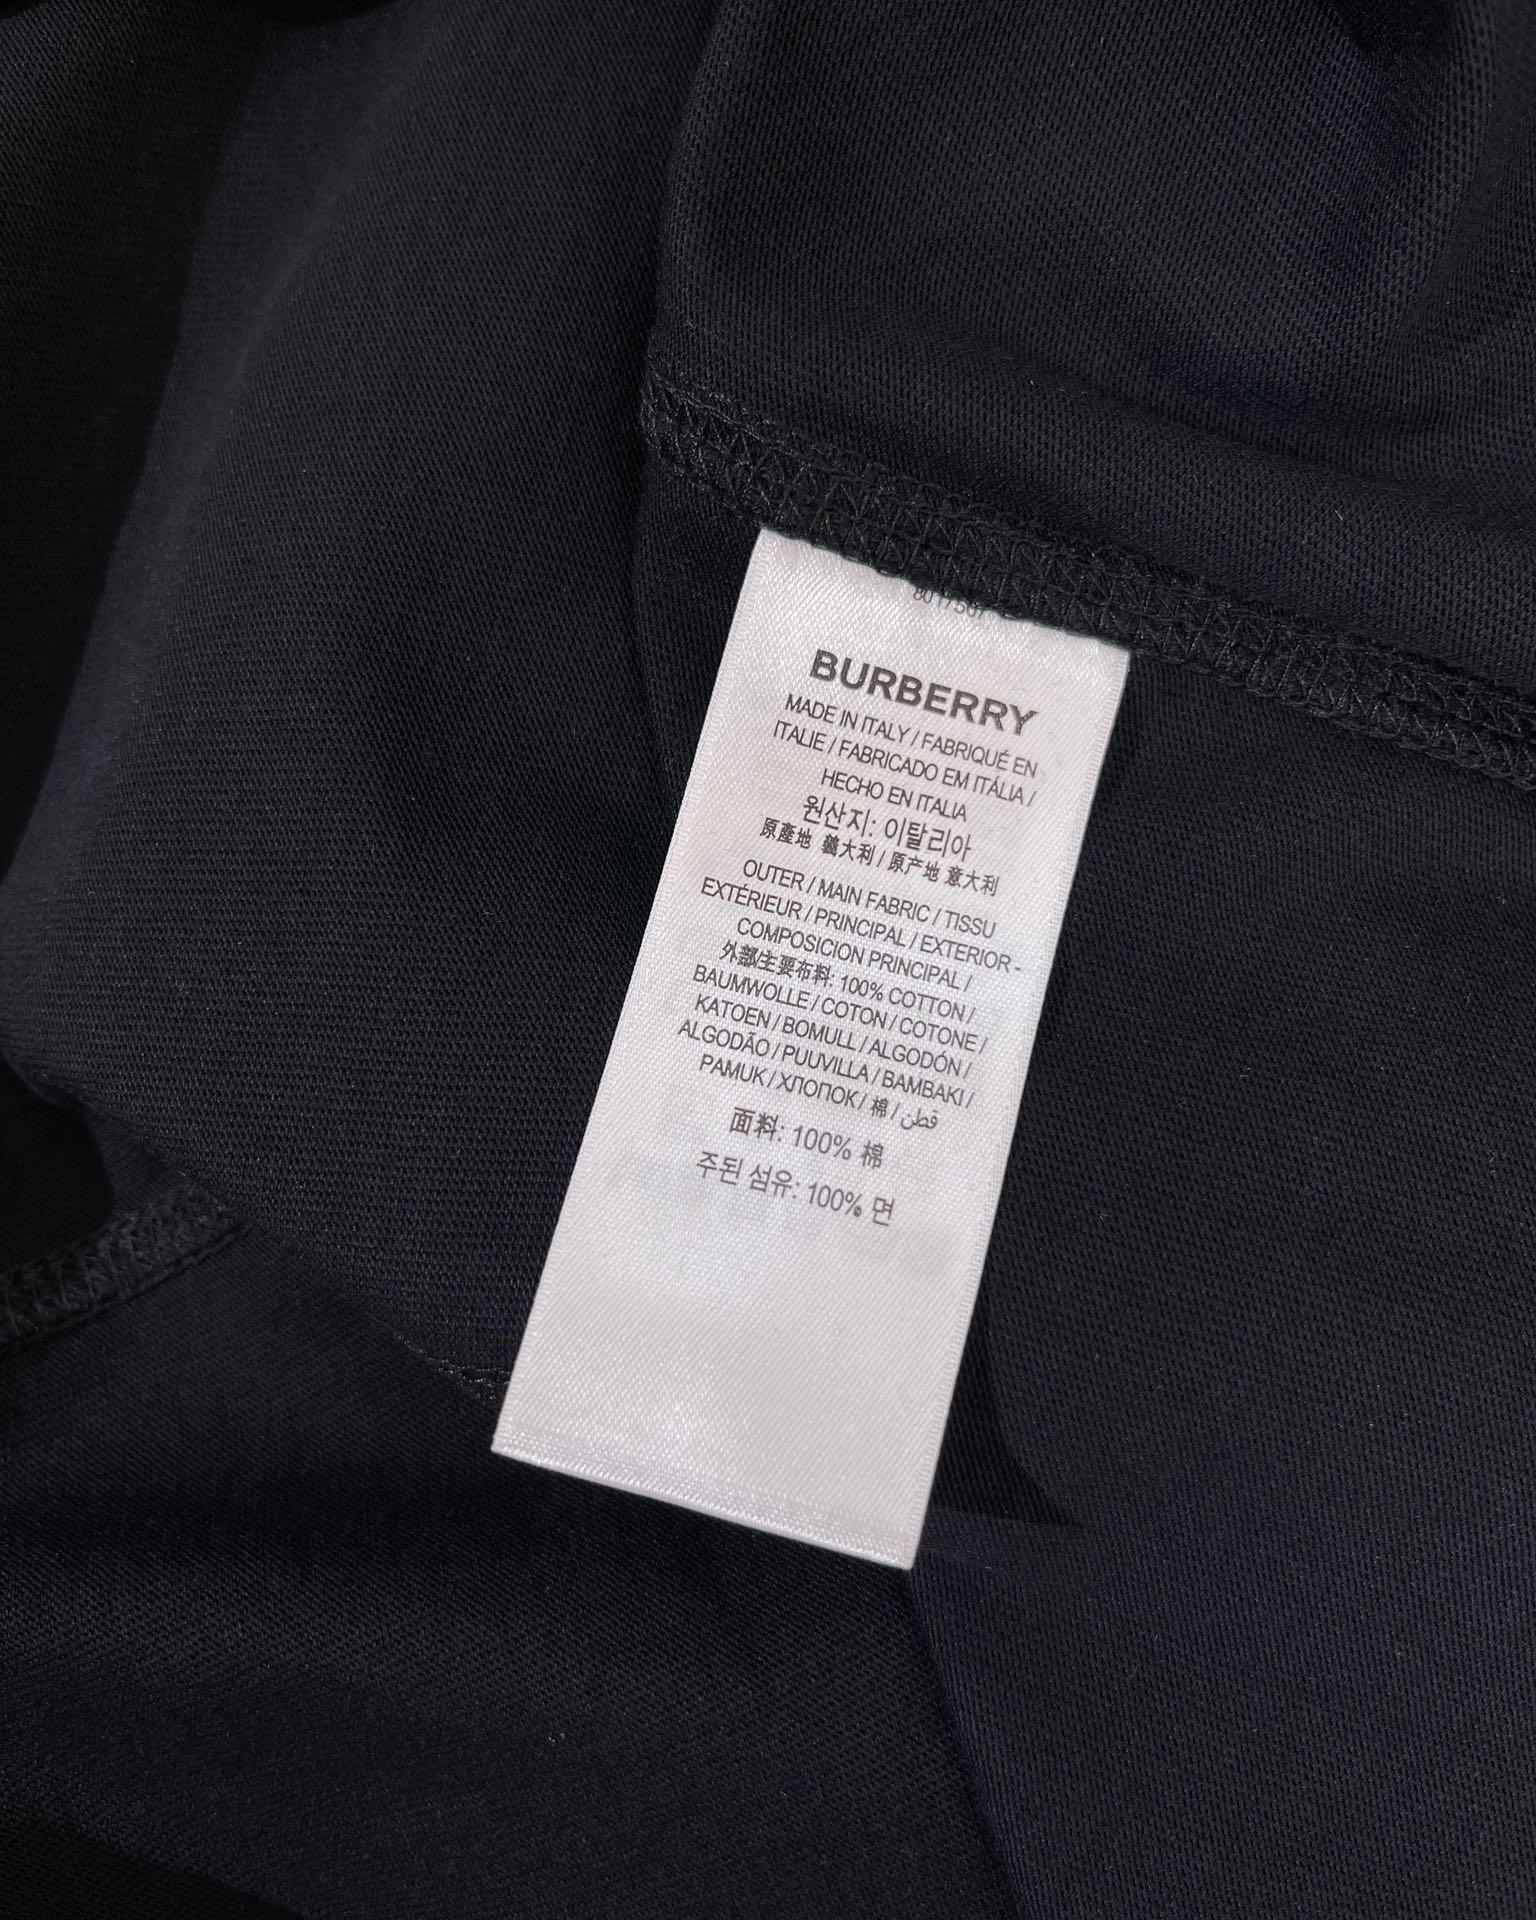 Burberry博柏利BBR款式男女同款短袖T恤衫T-shirt选用平织棉面料打造装饰丝网印花工艺呈现的